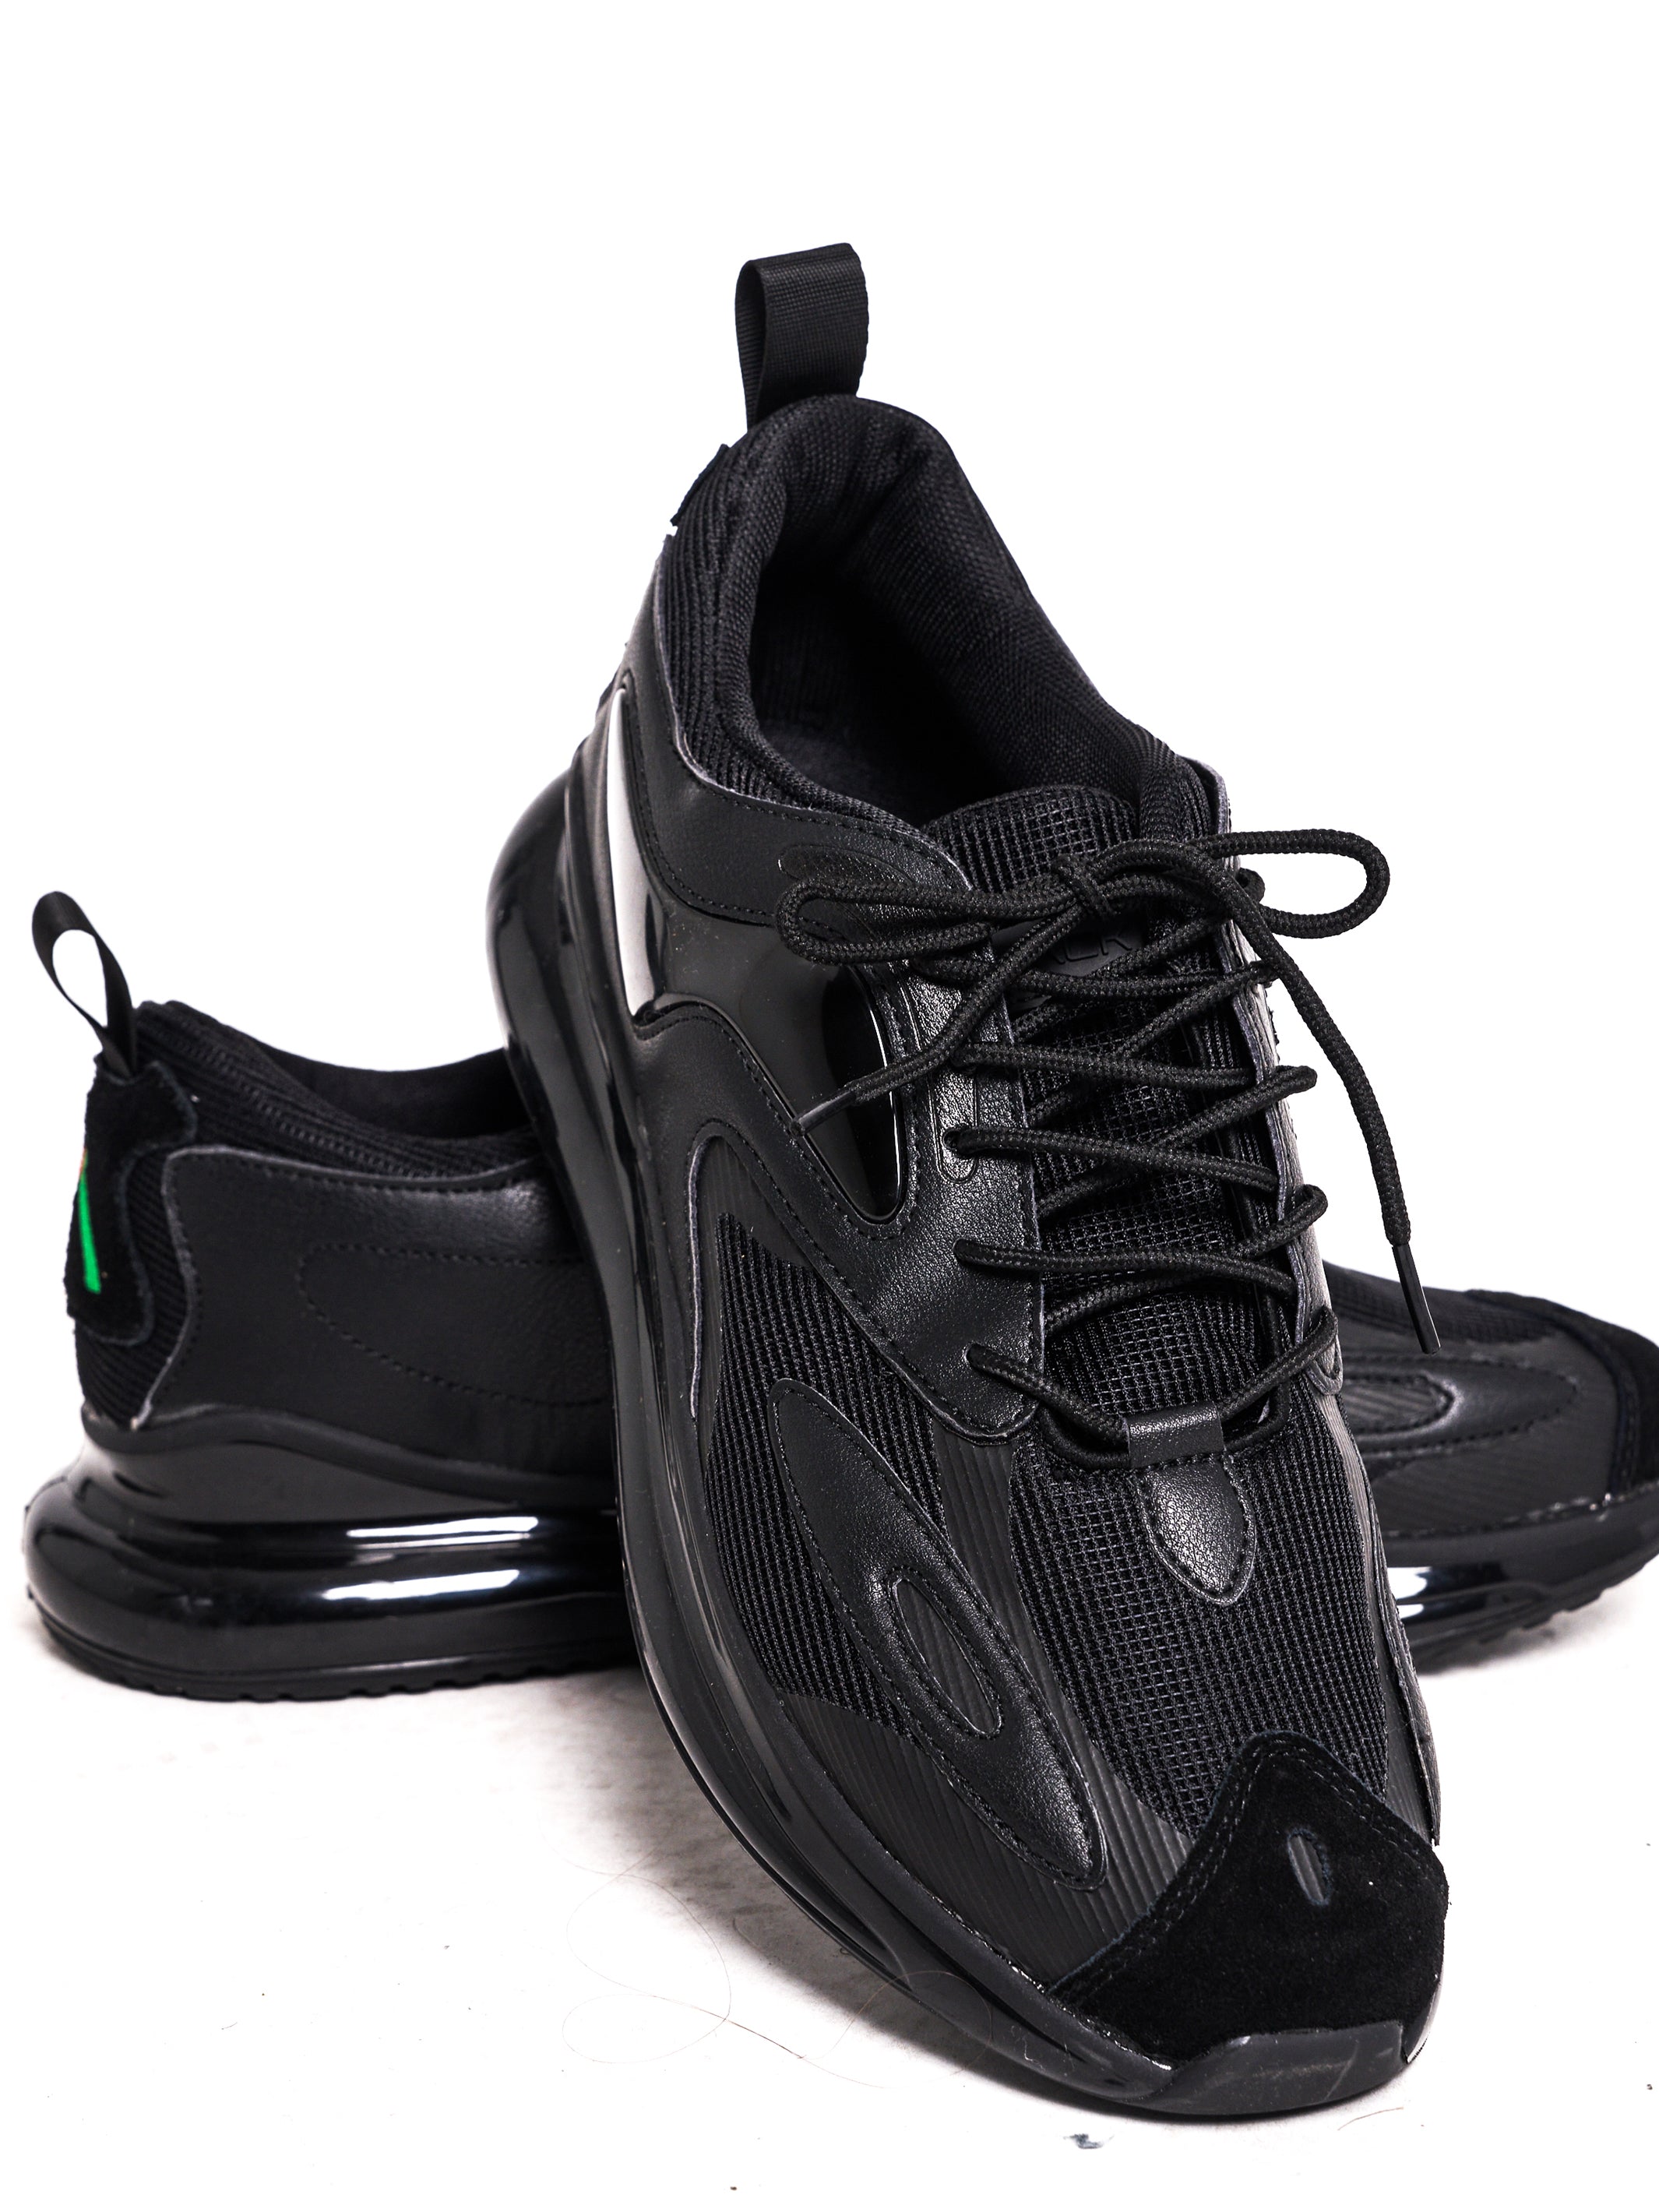 Actively Black Athleisure Shoe 2.0